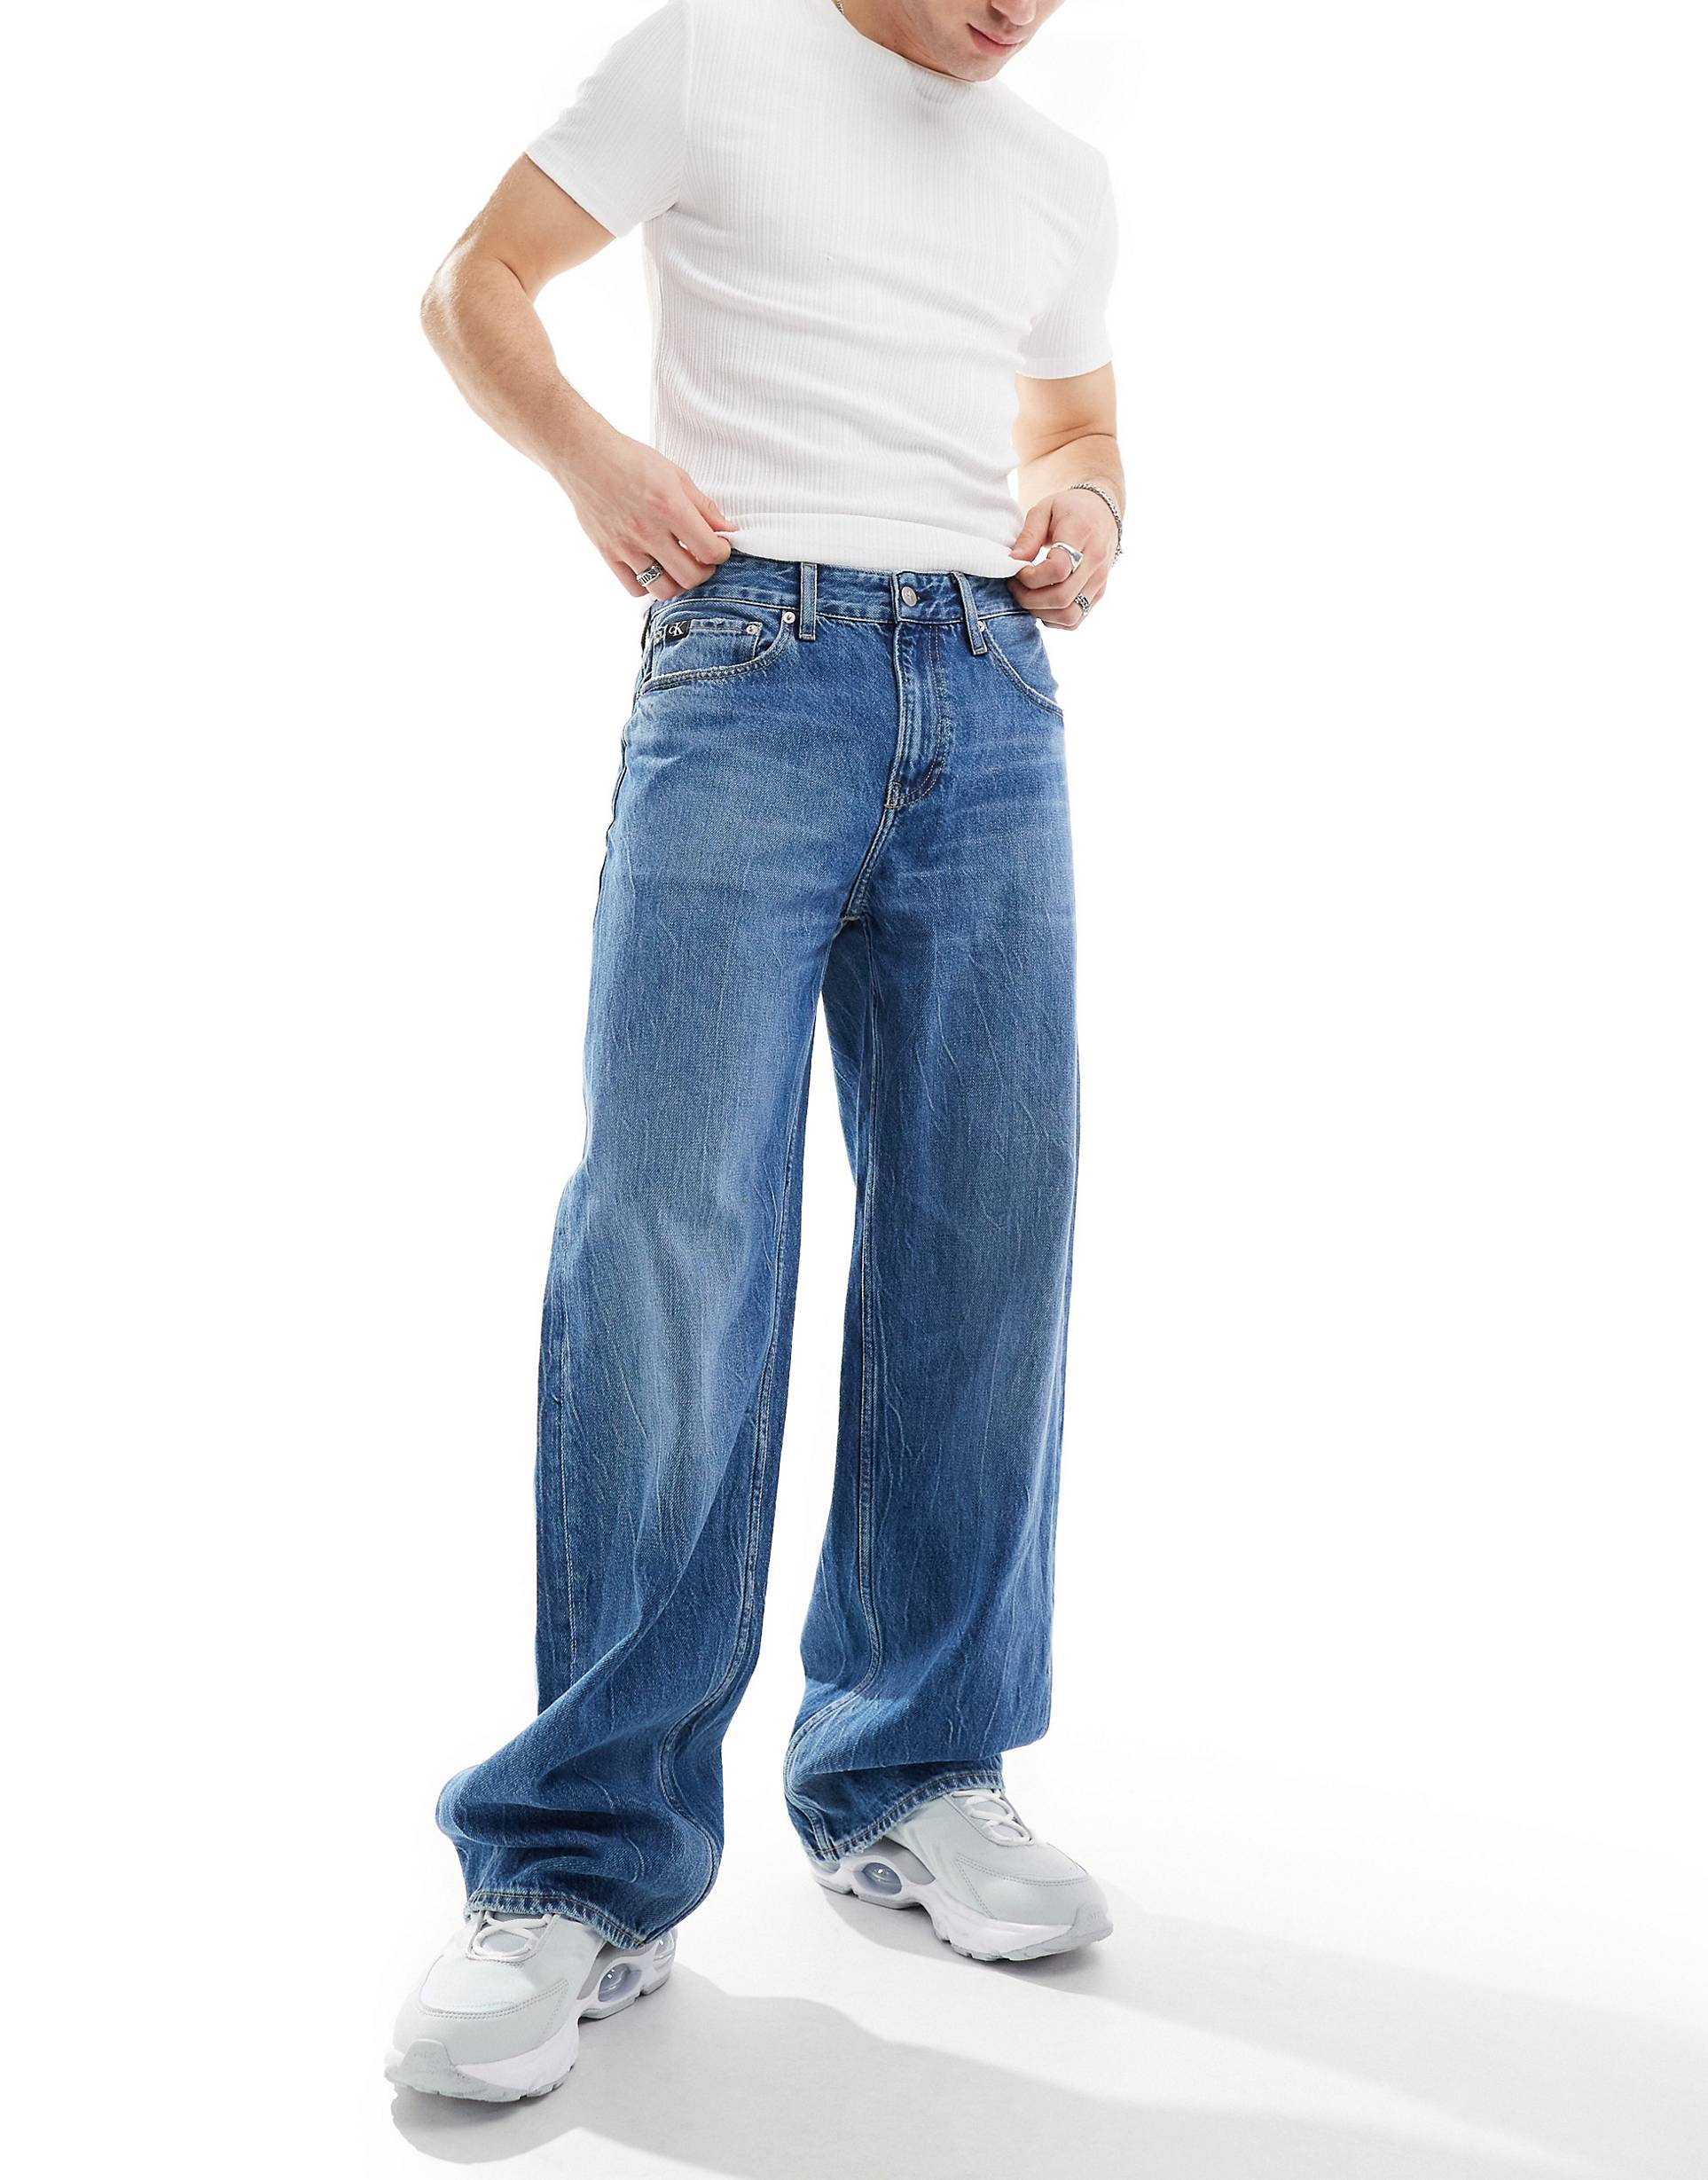 Джинсы Calvin Klein Jeans Loose Straight, темно-синий джинсы свободного кроя mom calvin klein jeans цвет denim dark